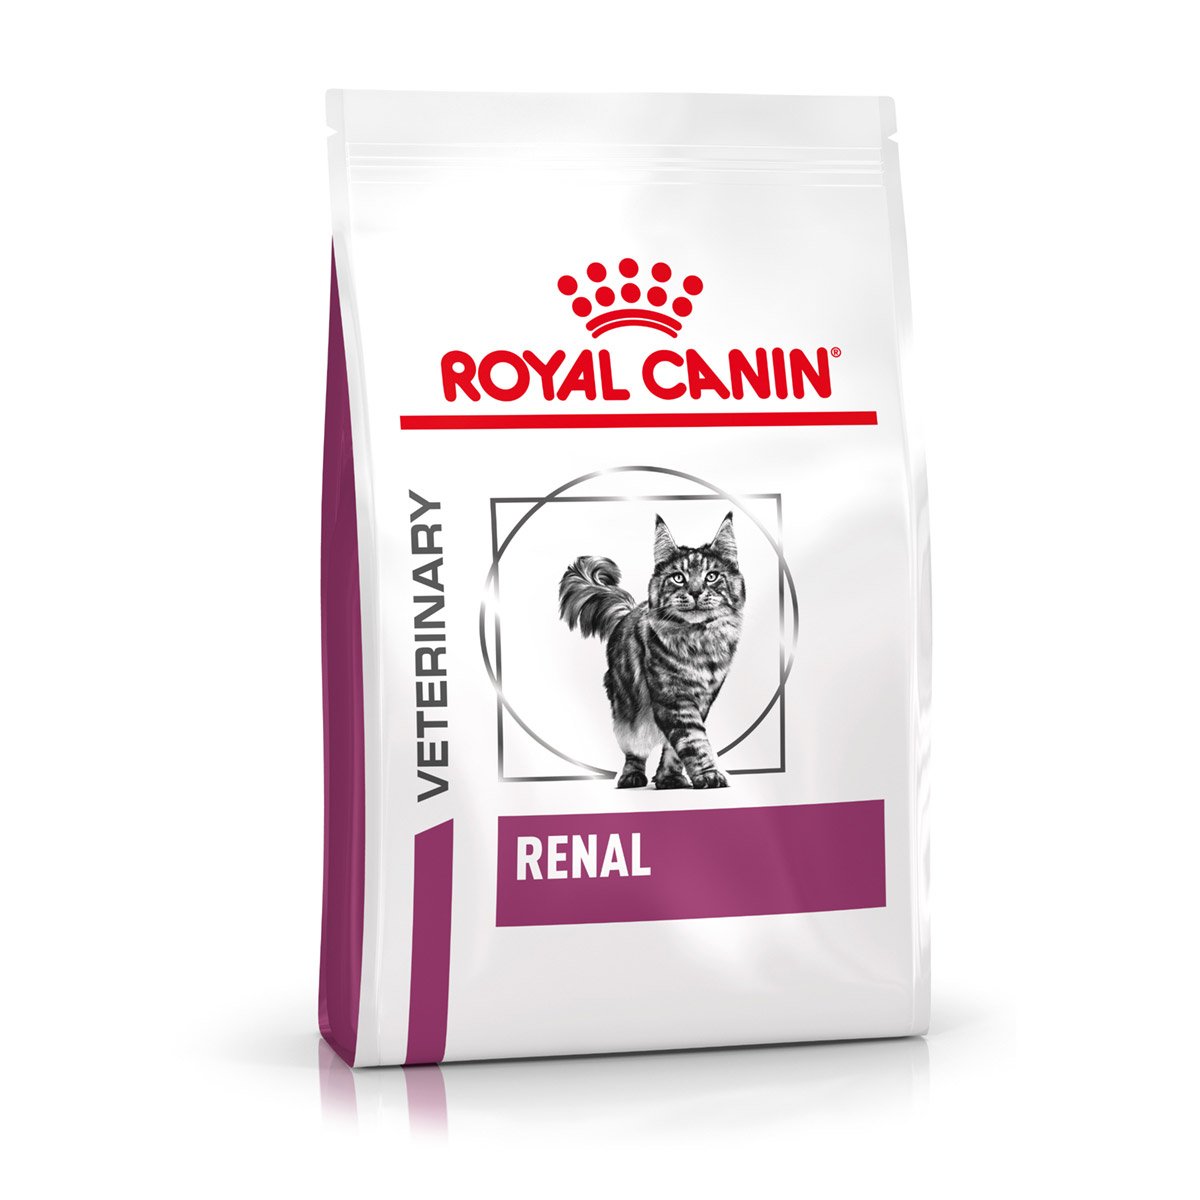 ROYAL CANIN® Veterinary RENAL Trockenfutter für Katzen 4kg von Royal Canin